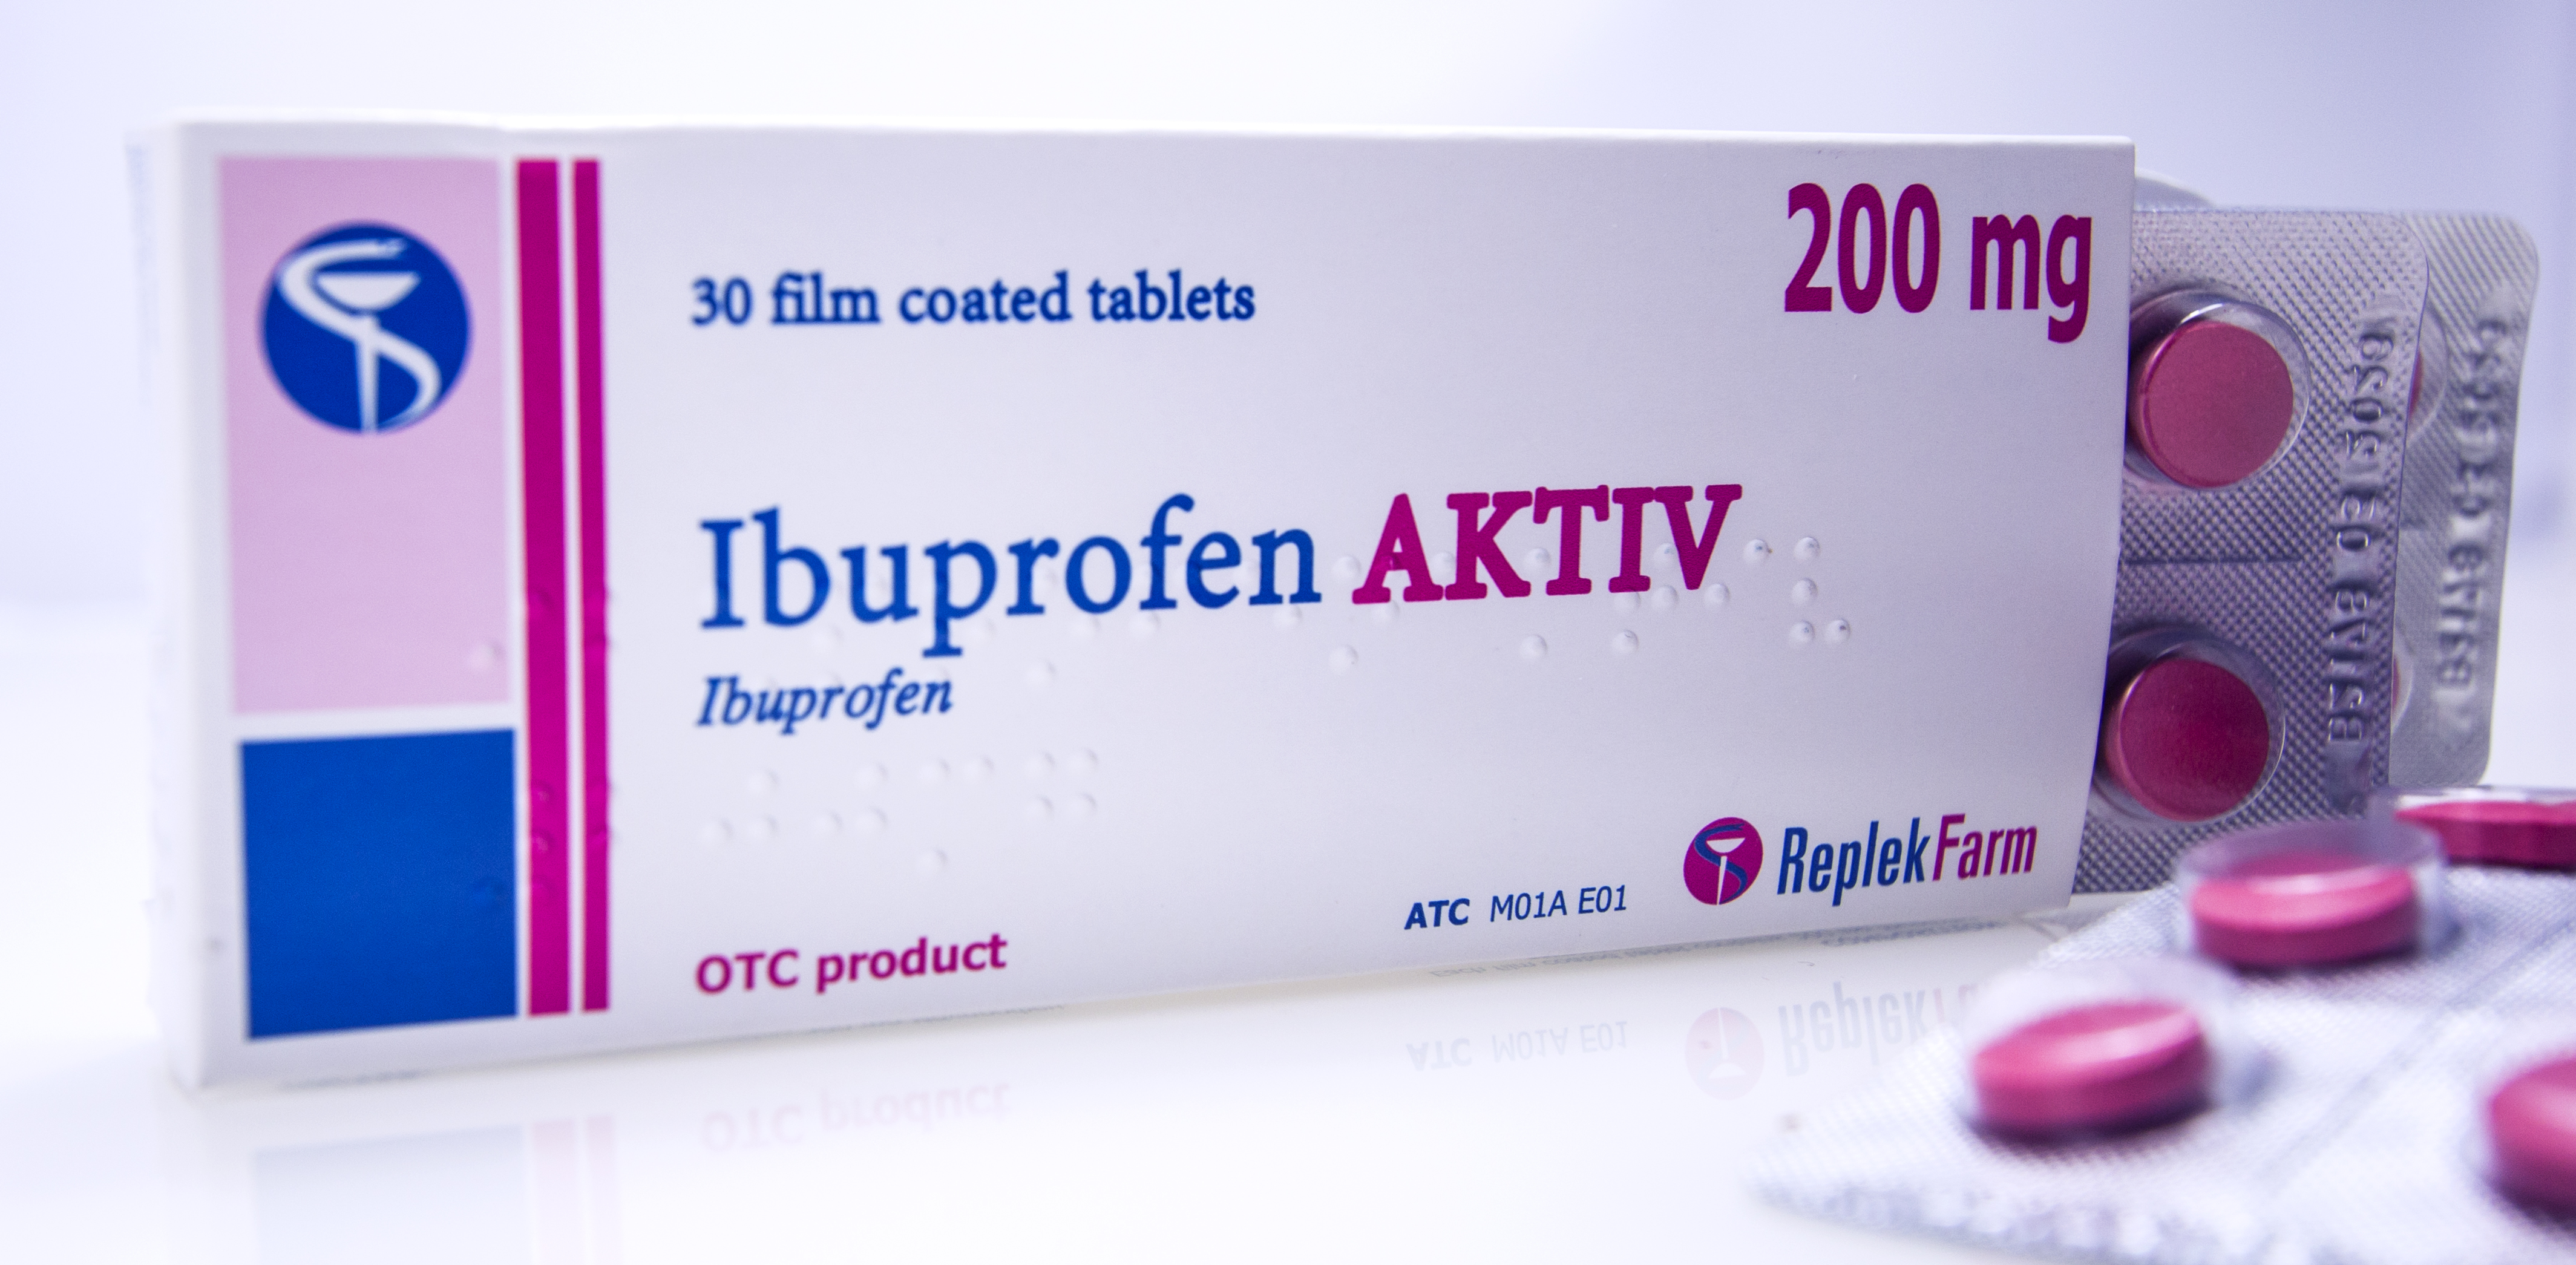 Ibuprofen Aktiv® Tablets